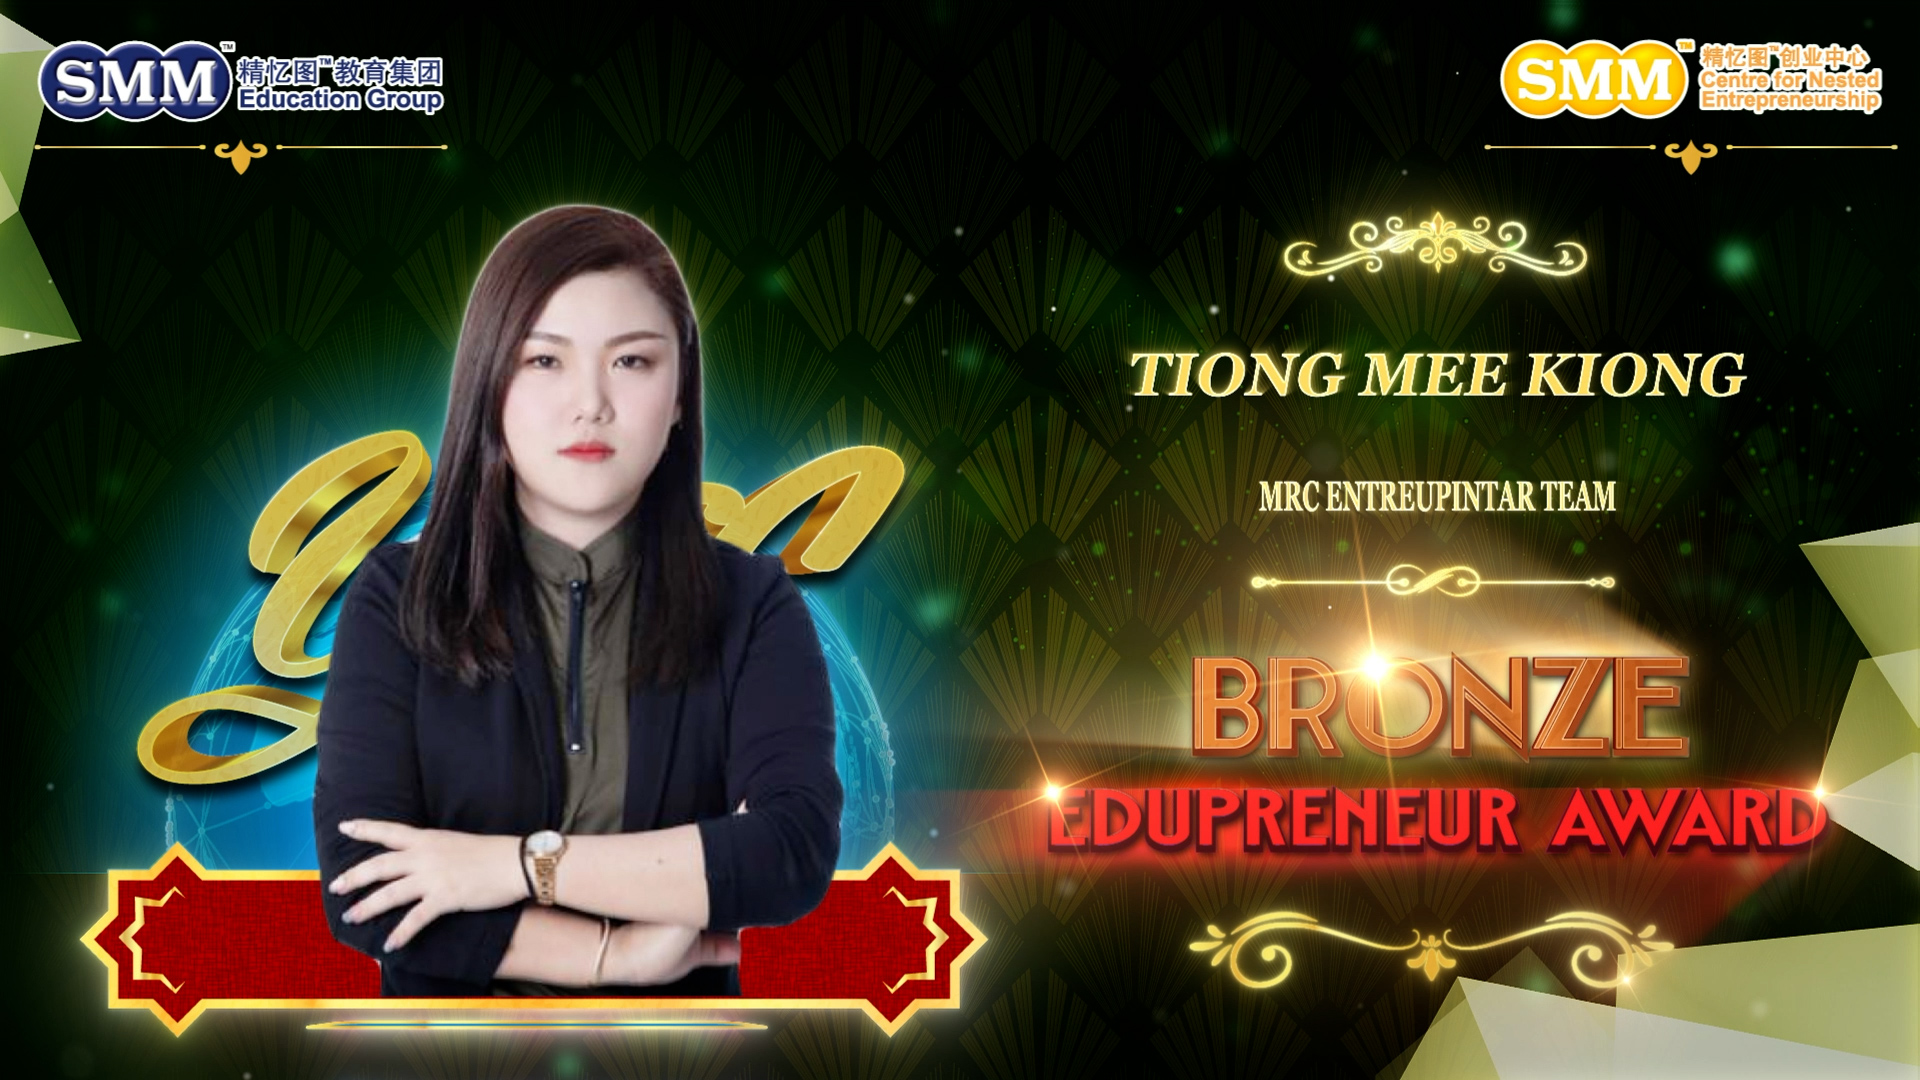 [Bronze Edupreneur Awardee 2023] Tiong Mee Kiong | MRC Entreupintar Team